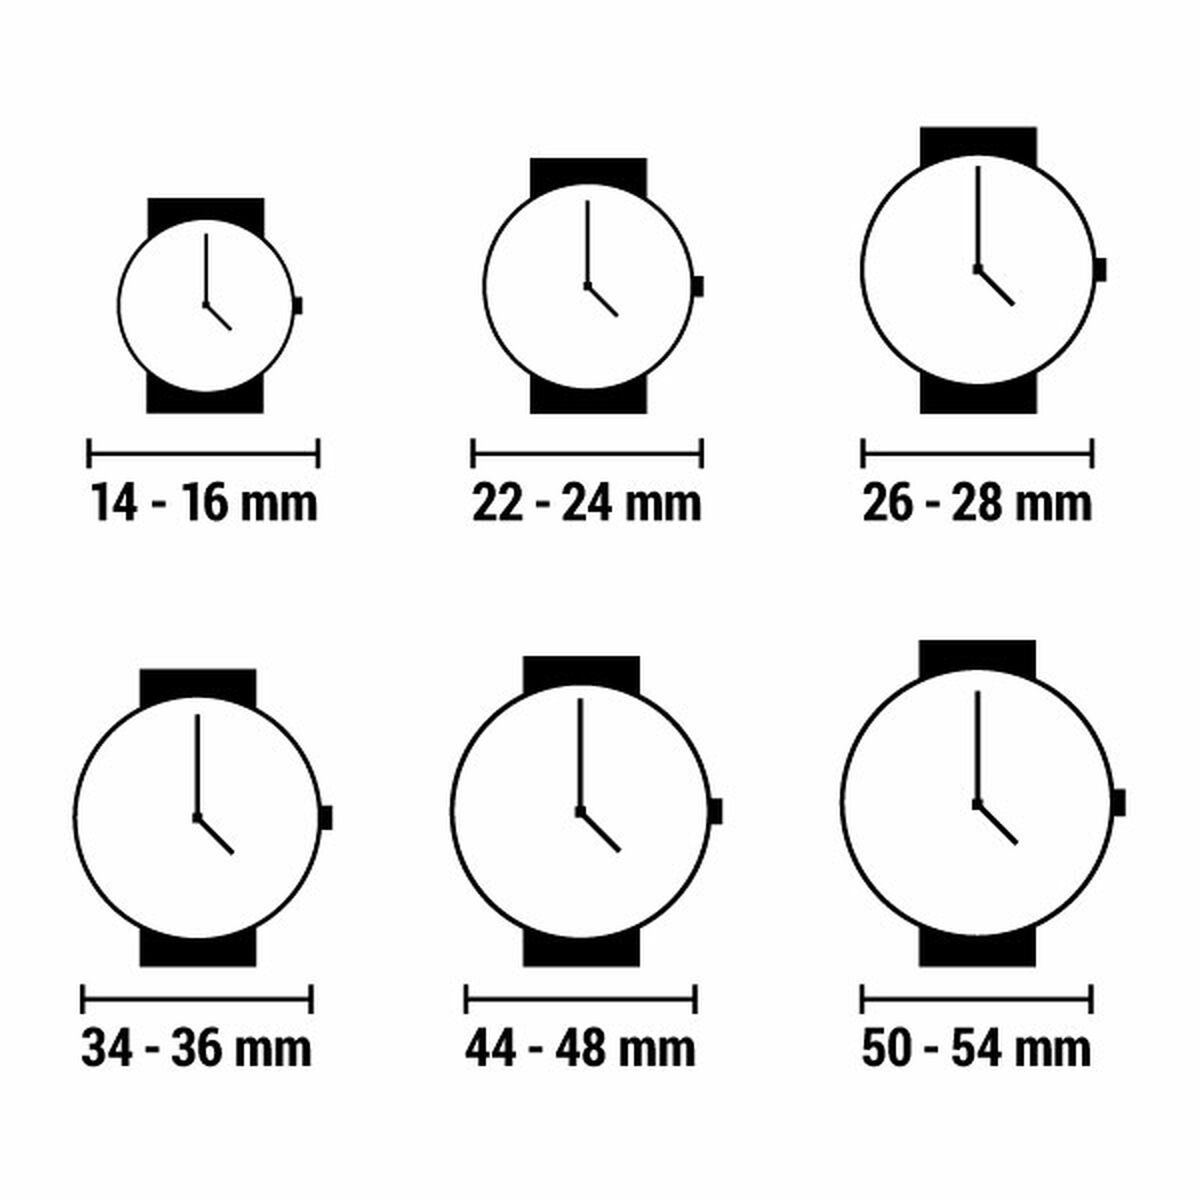 Horloge Dames Q&Q S295J402Y (Ø 32 mm)